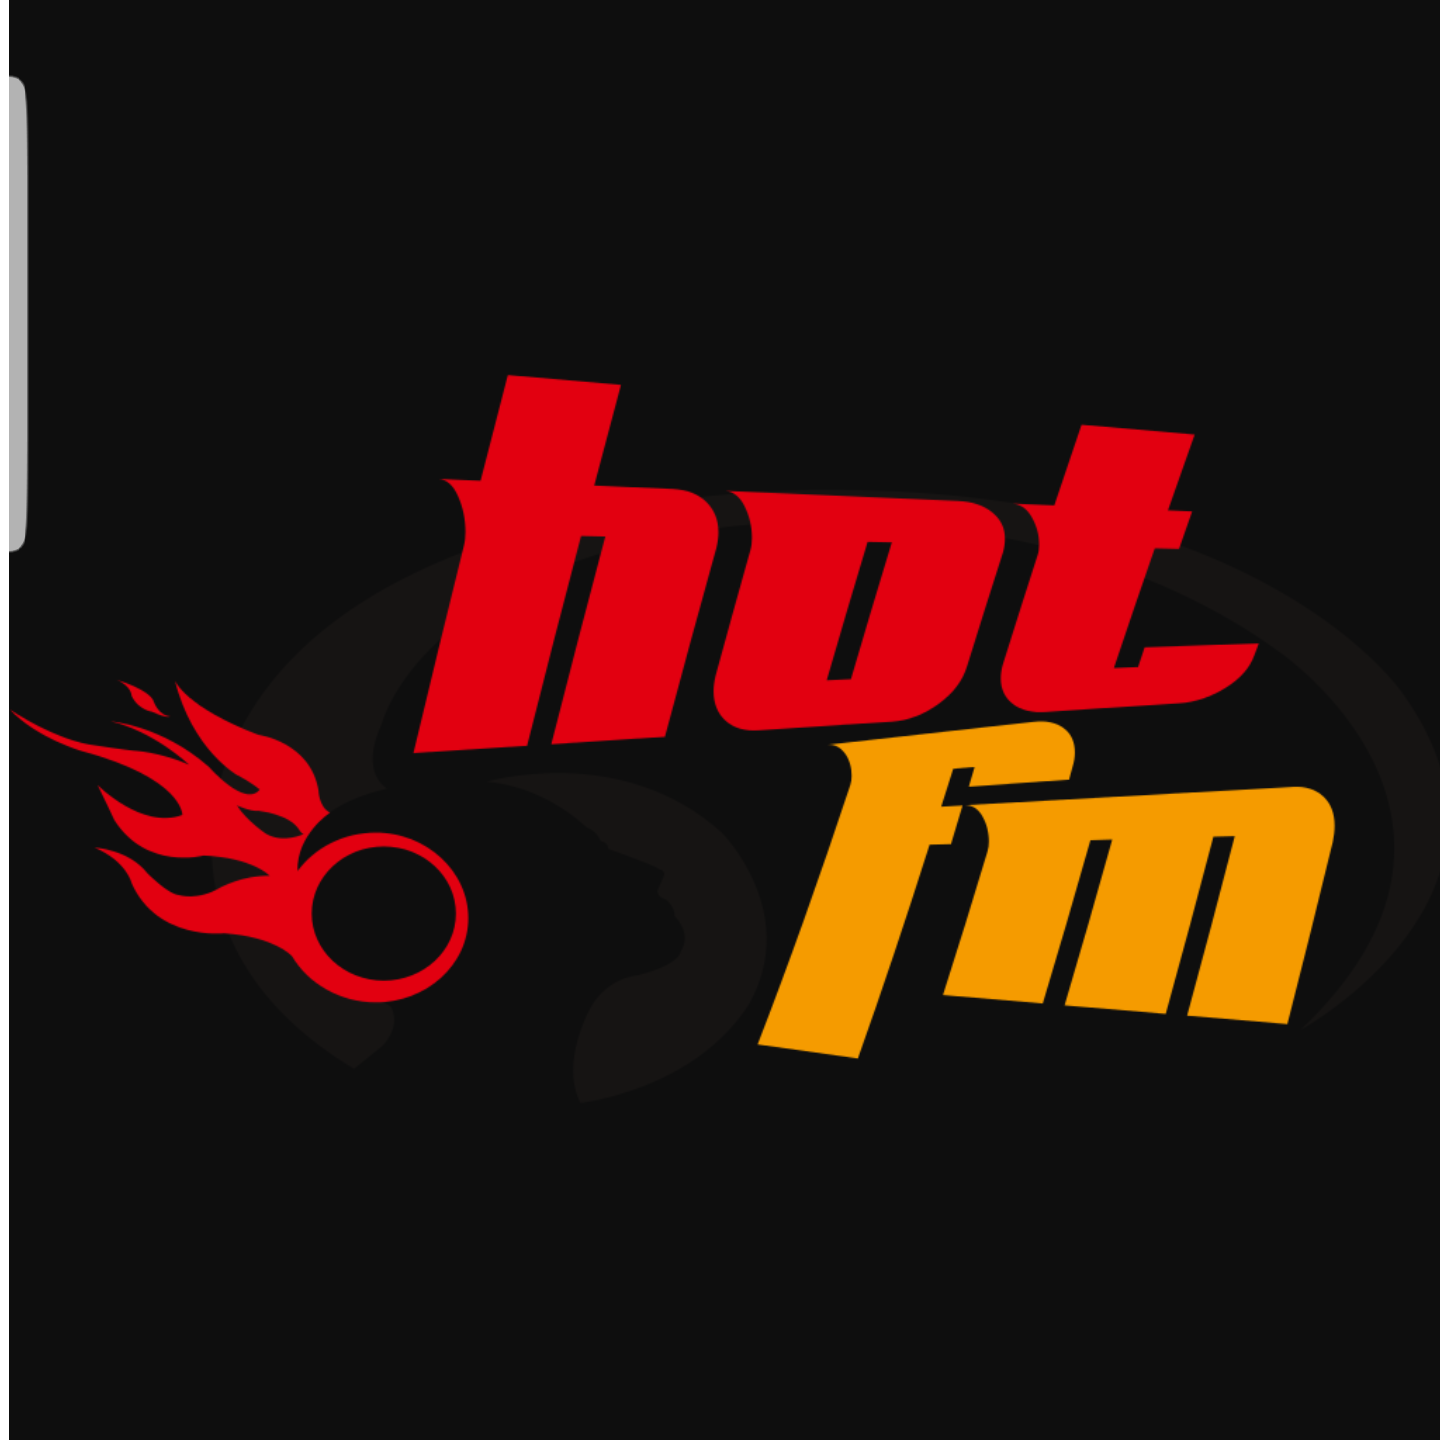 Fm radio hot online